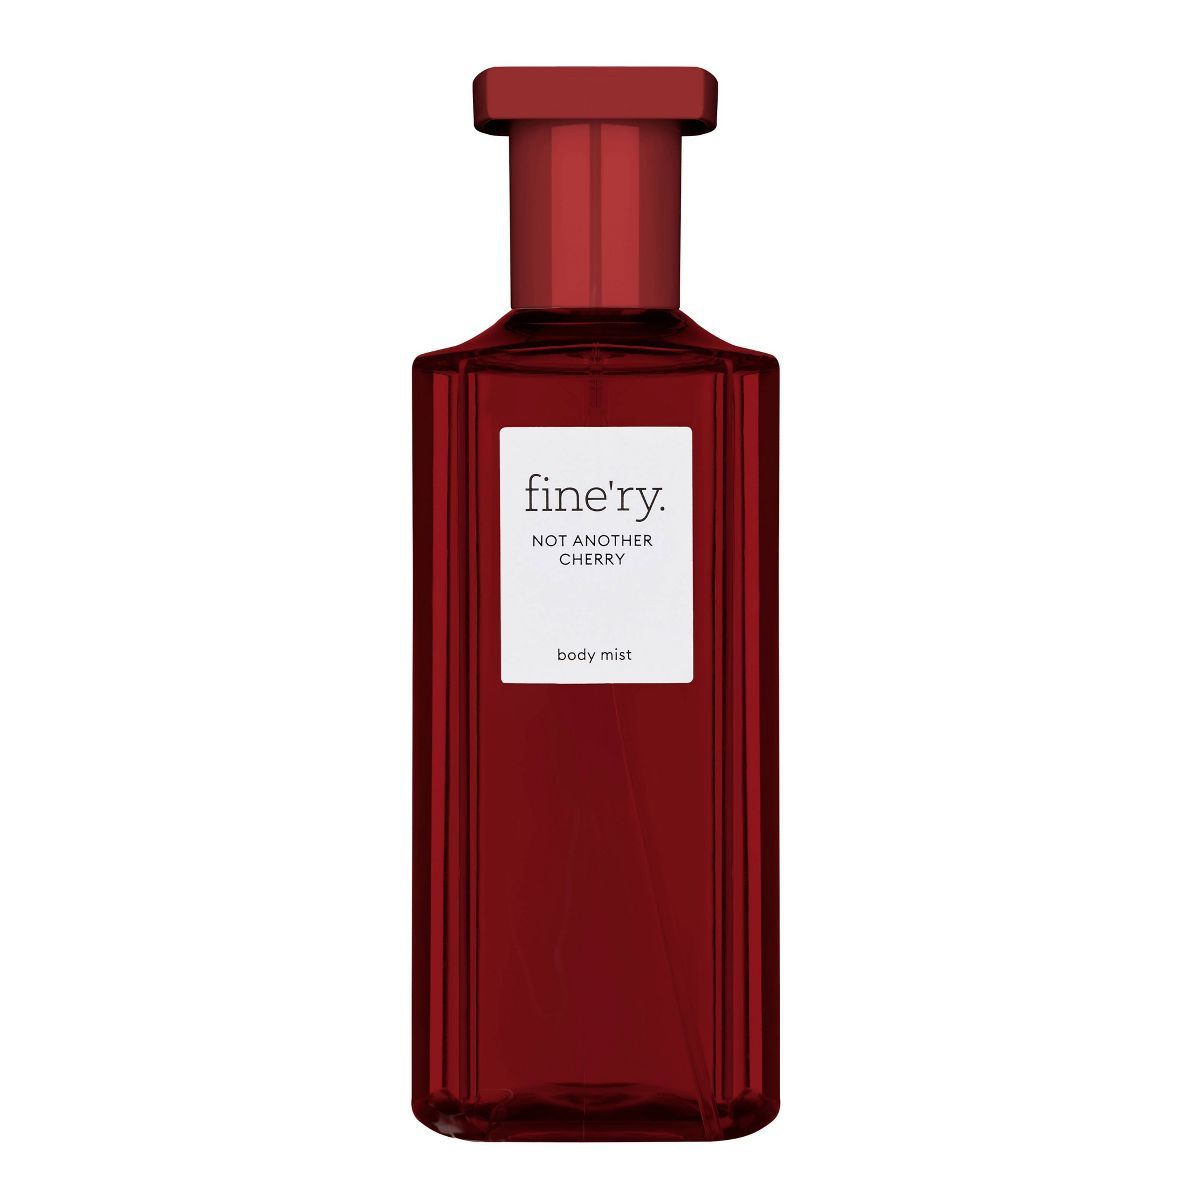 Fine'ry Body Mist Fragrance Spray - Another Cherry - 5.07 fl oz | Target